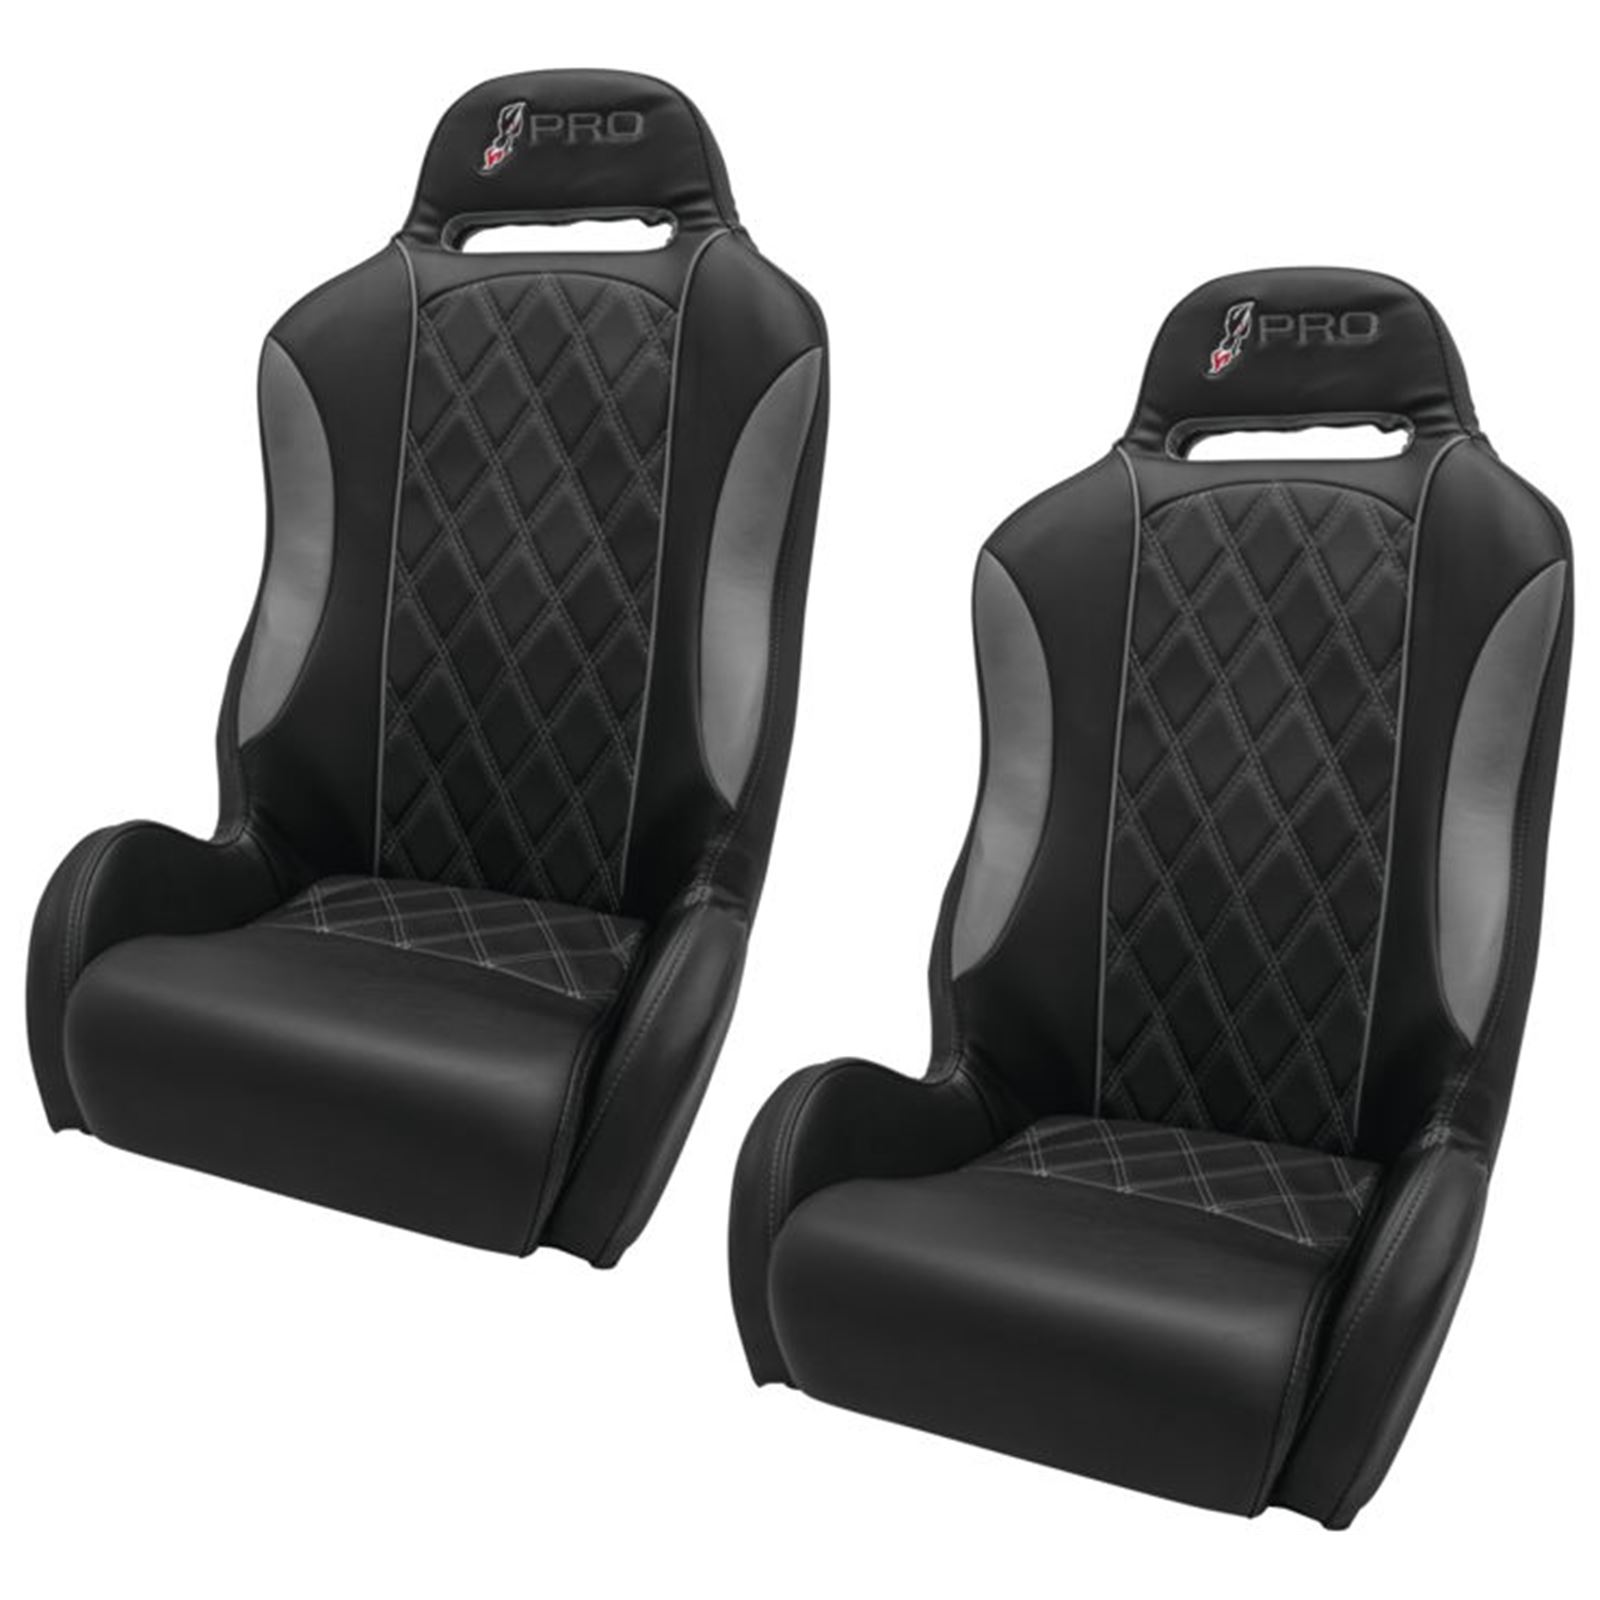 Dragonfire Racing Pro Series Seats - Black/Dark Grey